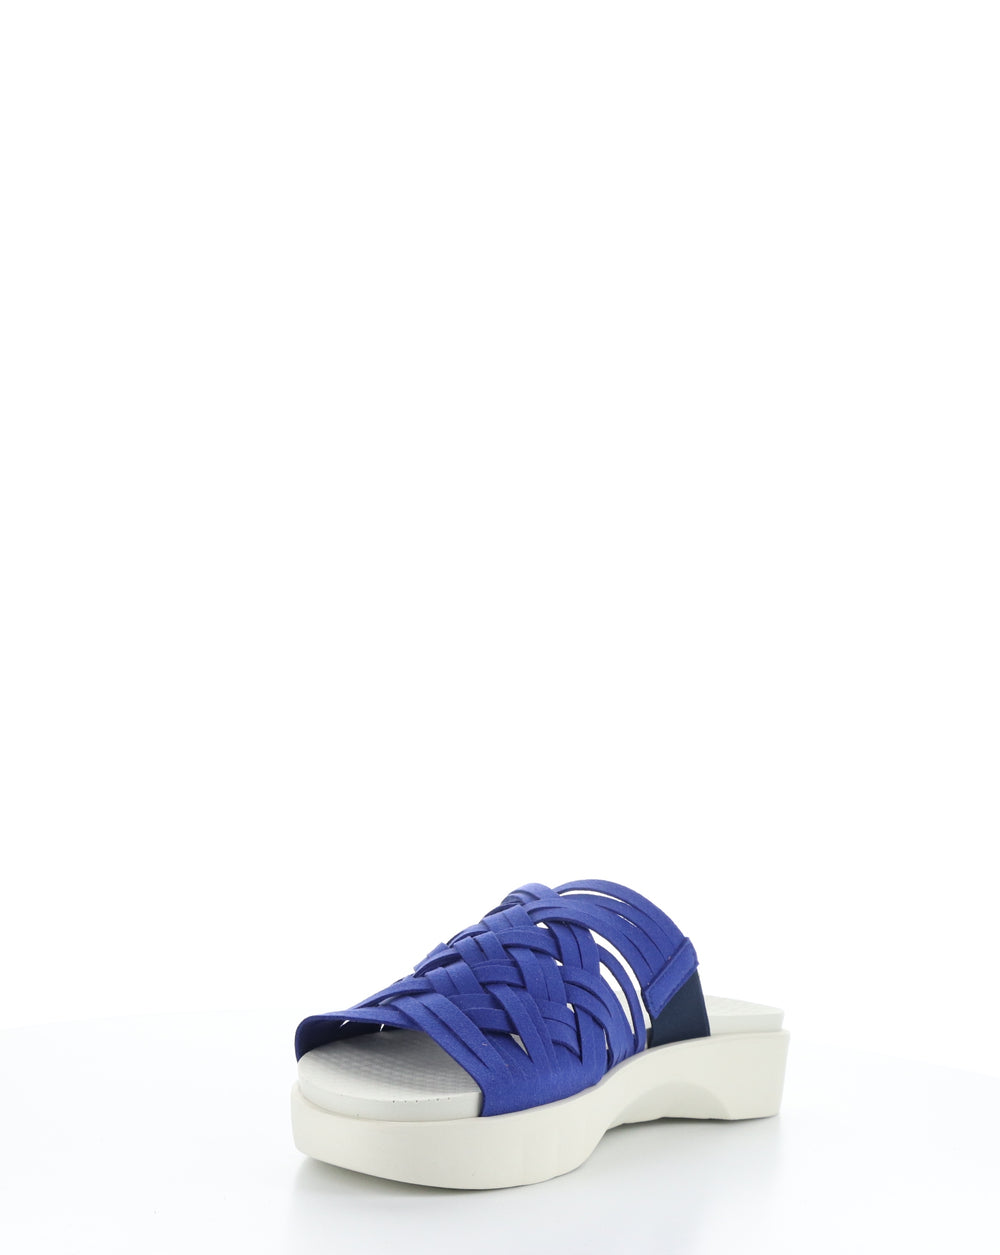 RISED BLUE Slip-on Sandals